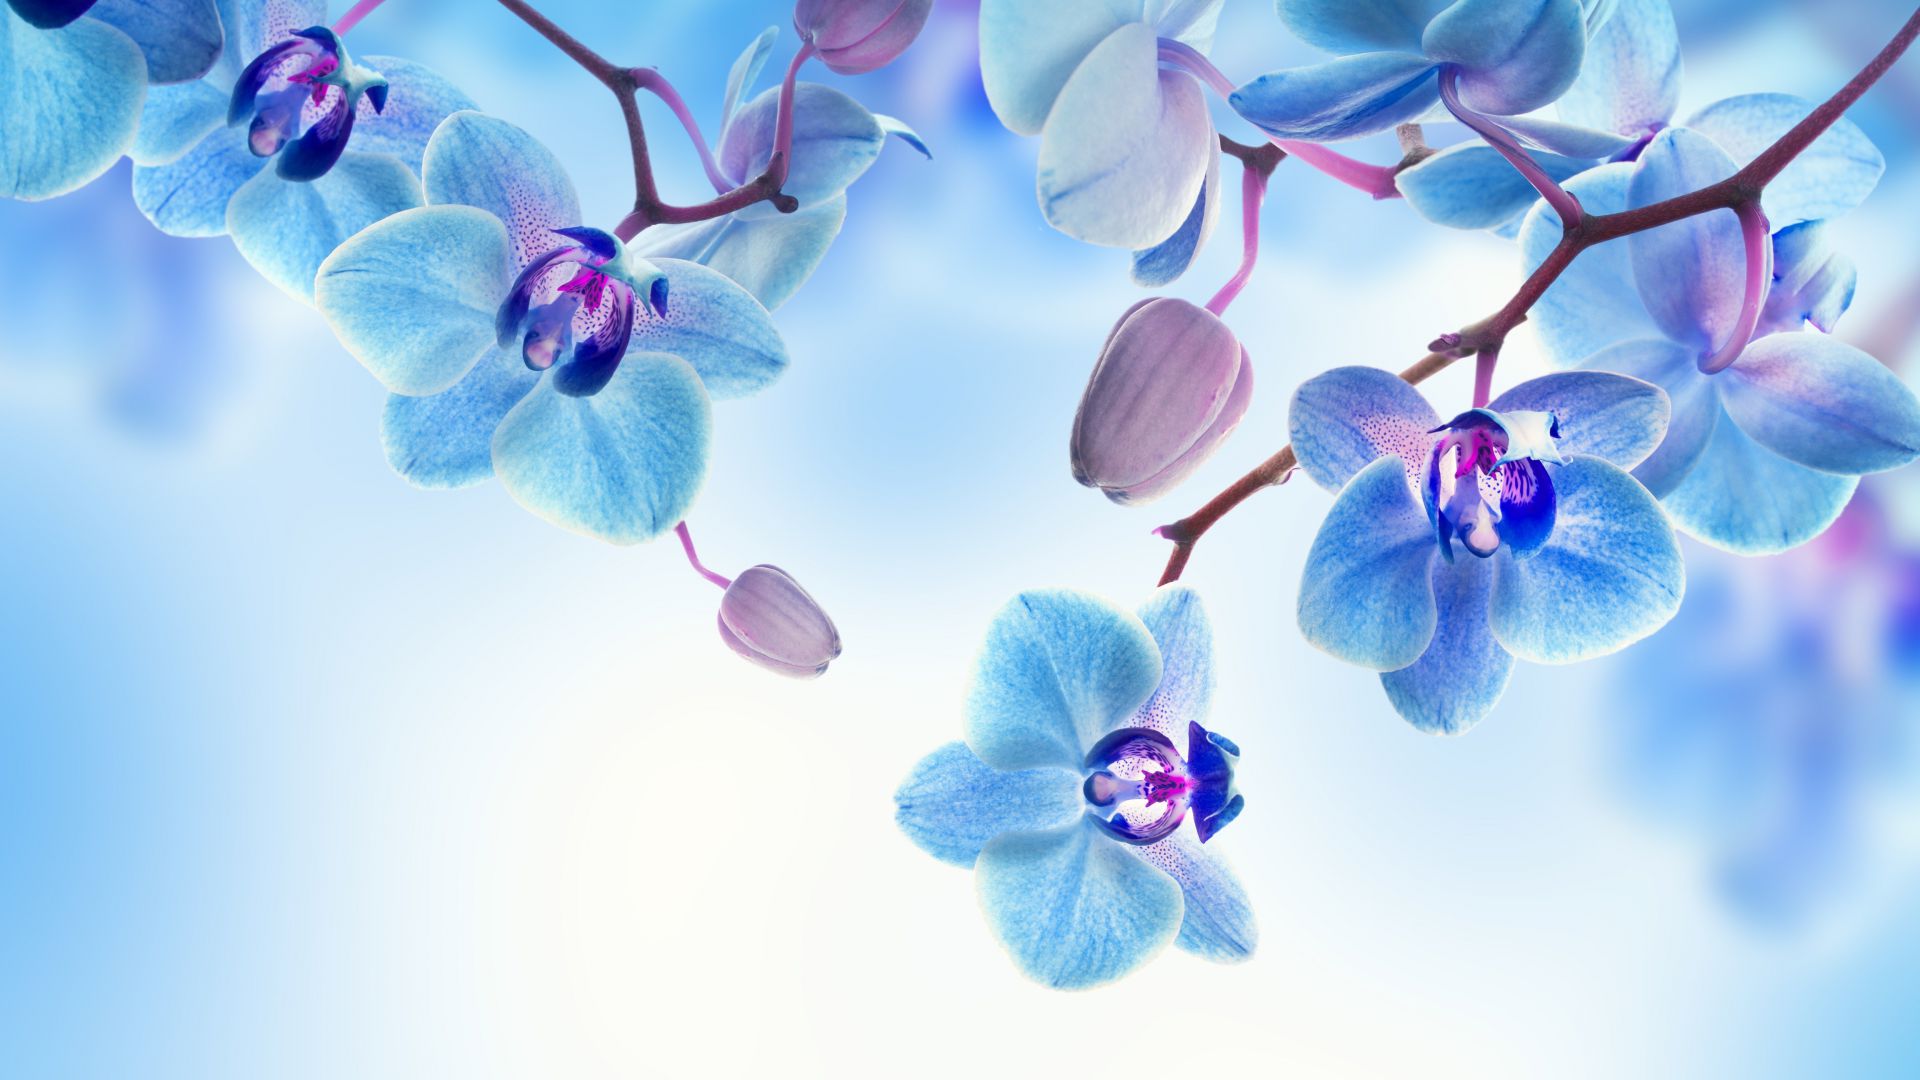 Орхидея, 5k, 4k, цветы, синий, белый, Orchid, 5k, 4k wallpaper, flowers, blue, white (horizontal)